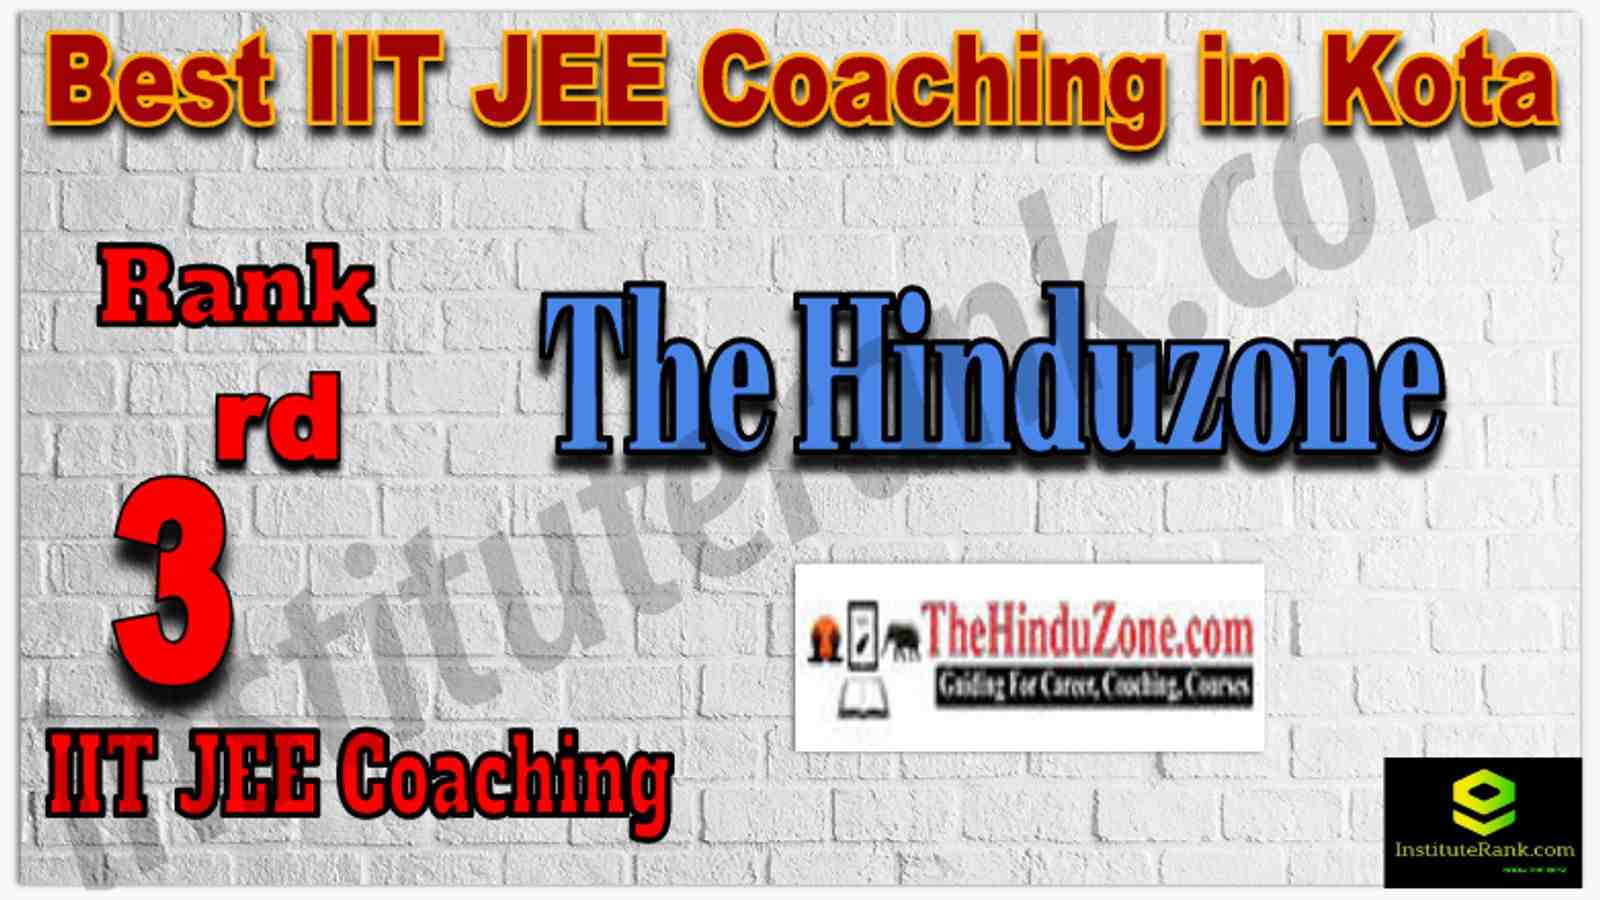 Rank 3rd Best IIT JEE Coaching in Kota